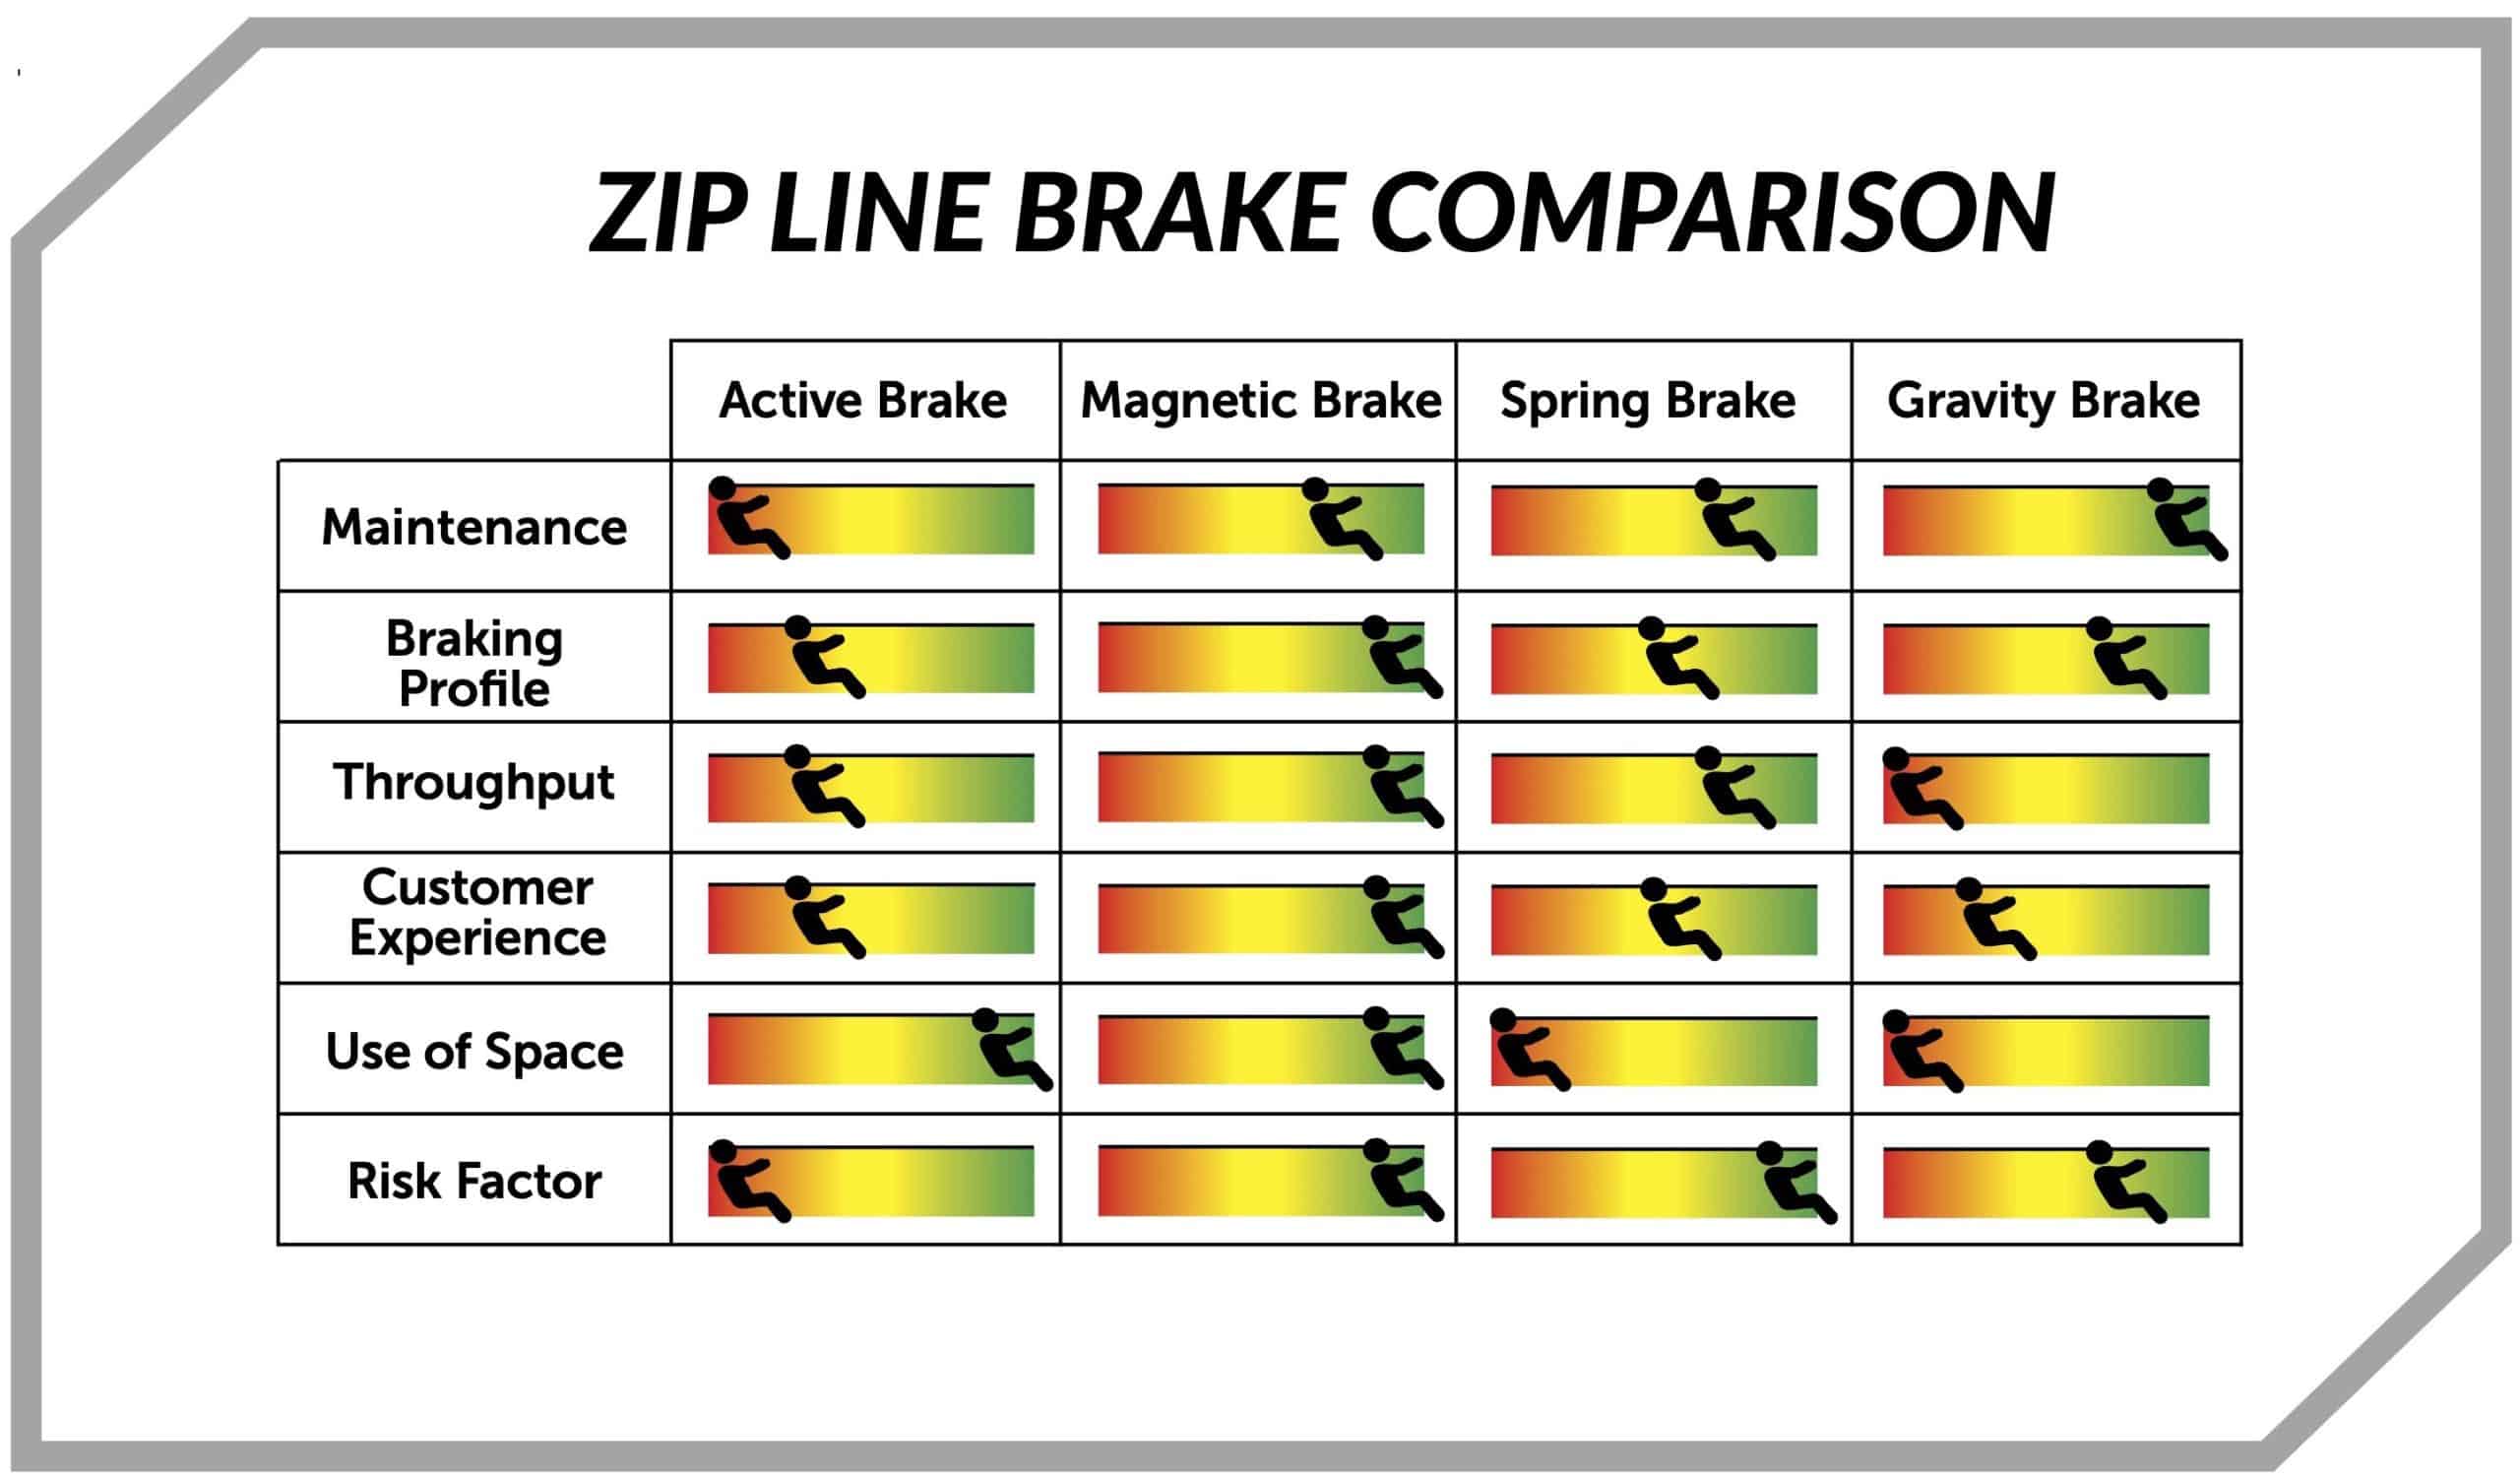 CRESTWALKER Strong Stainless Steel 6.3 ft Zipline Spring Brake Fits Cable up to 1/2 for Kids Backyard Zip Line Braking System 